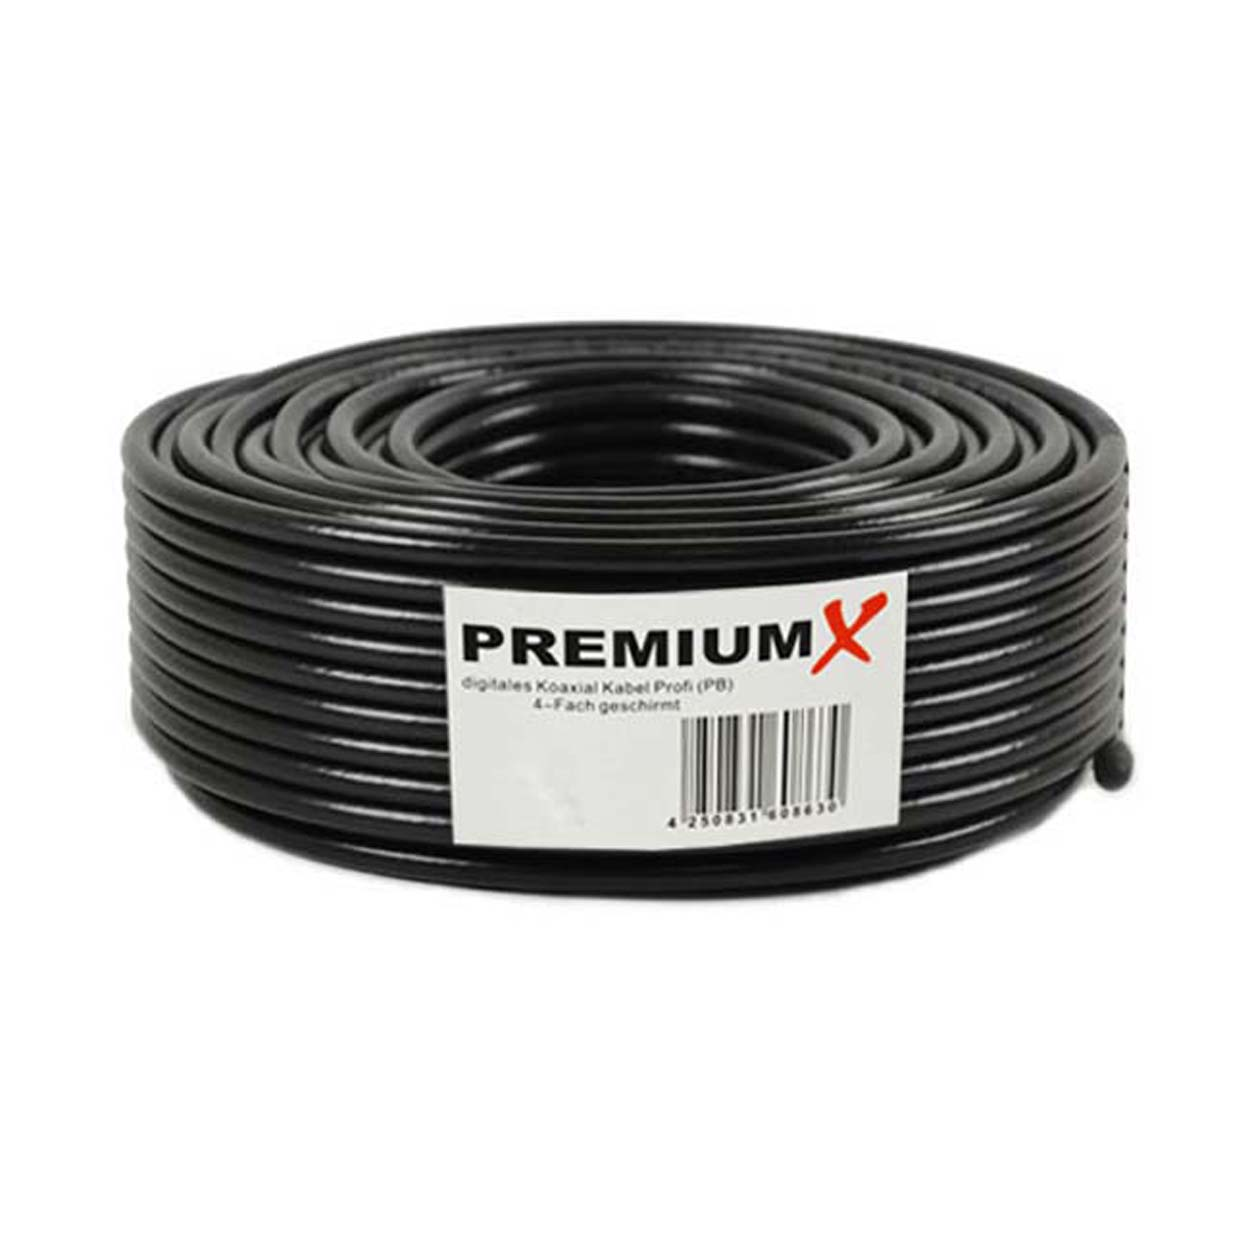 PREMIUMX 25m Koaxialkabel 4-fach CCS 135dB SAT schwarz BASIC Kabel Antennenkabel